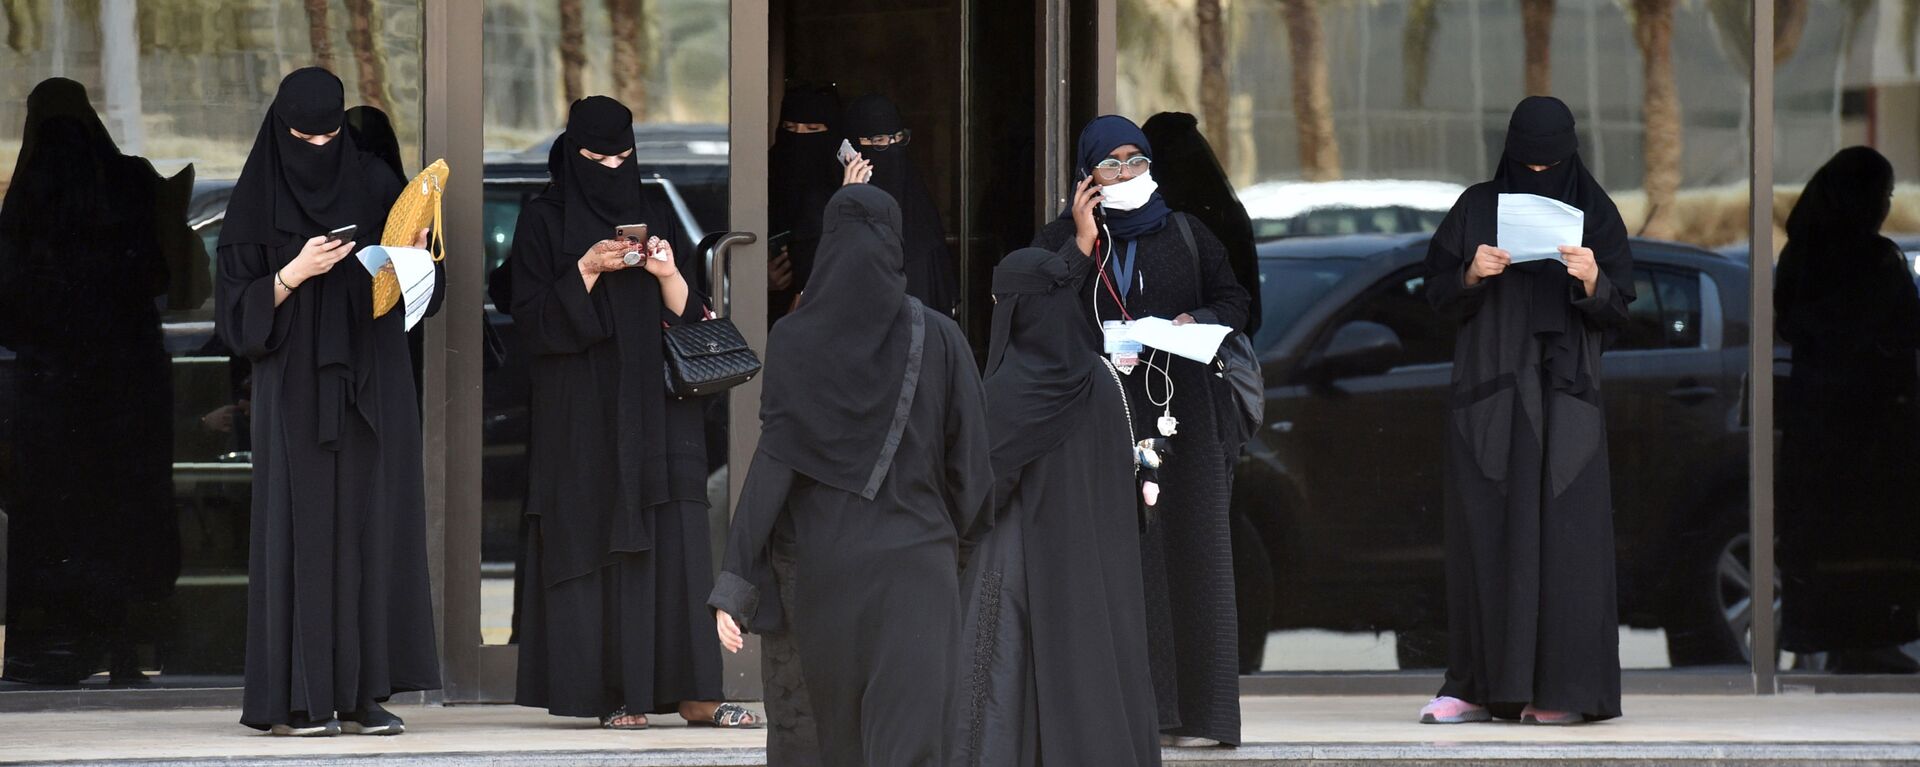 نساء سعوديات، 24 يونيو 2019 - سبوتنيك عربي, 1920, 08.08.2021